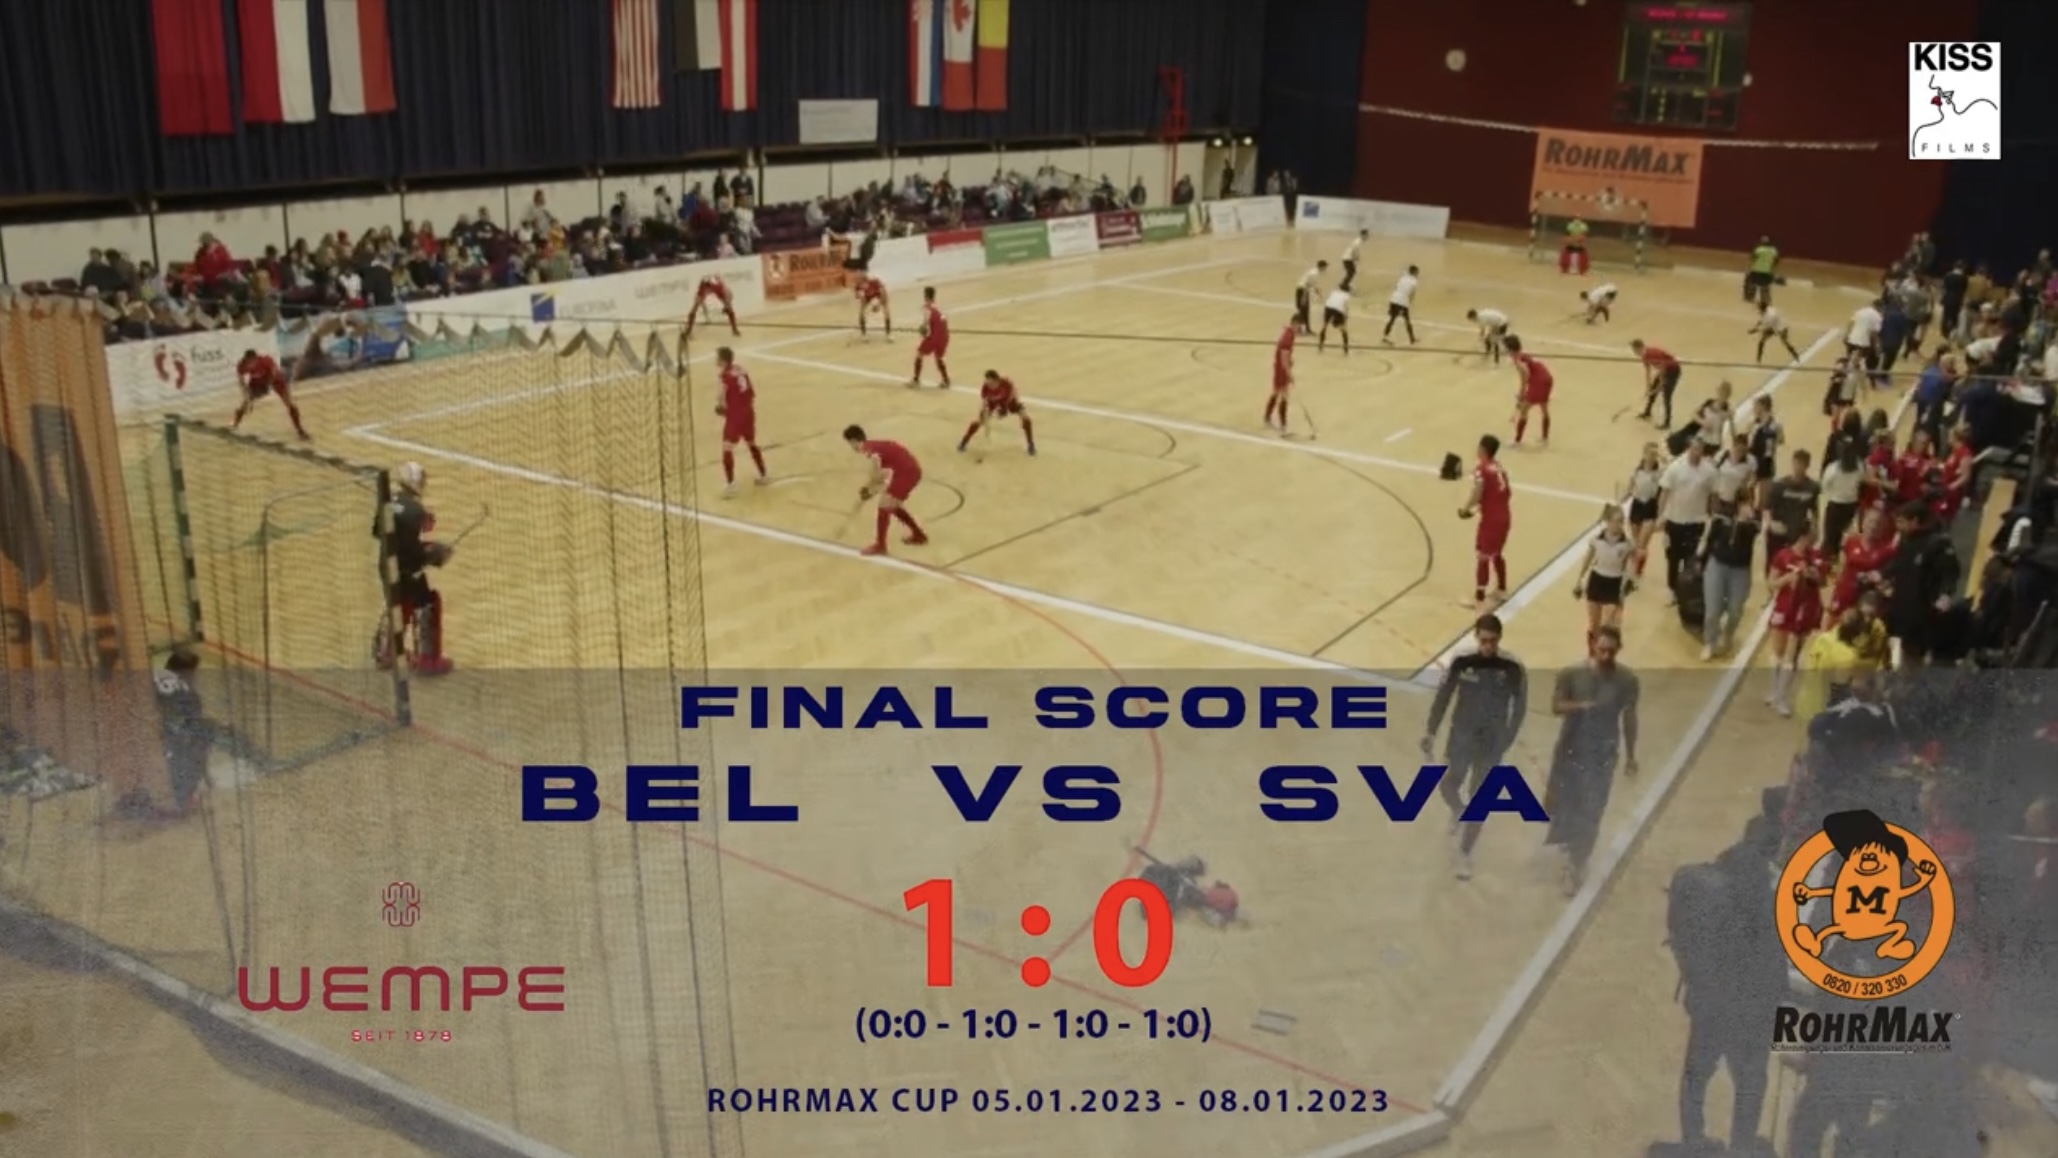 Final Score beim Live Streaming des Rohrmax Fieldhockey Cup BEL vs SVA 1:0